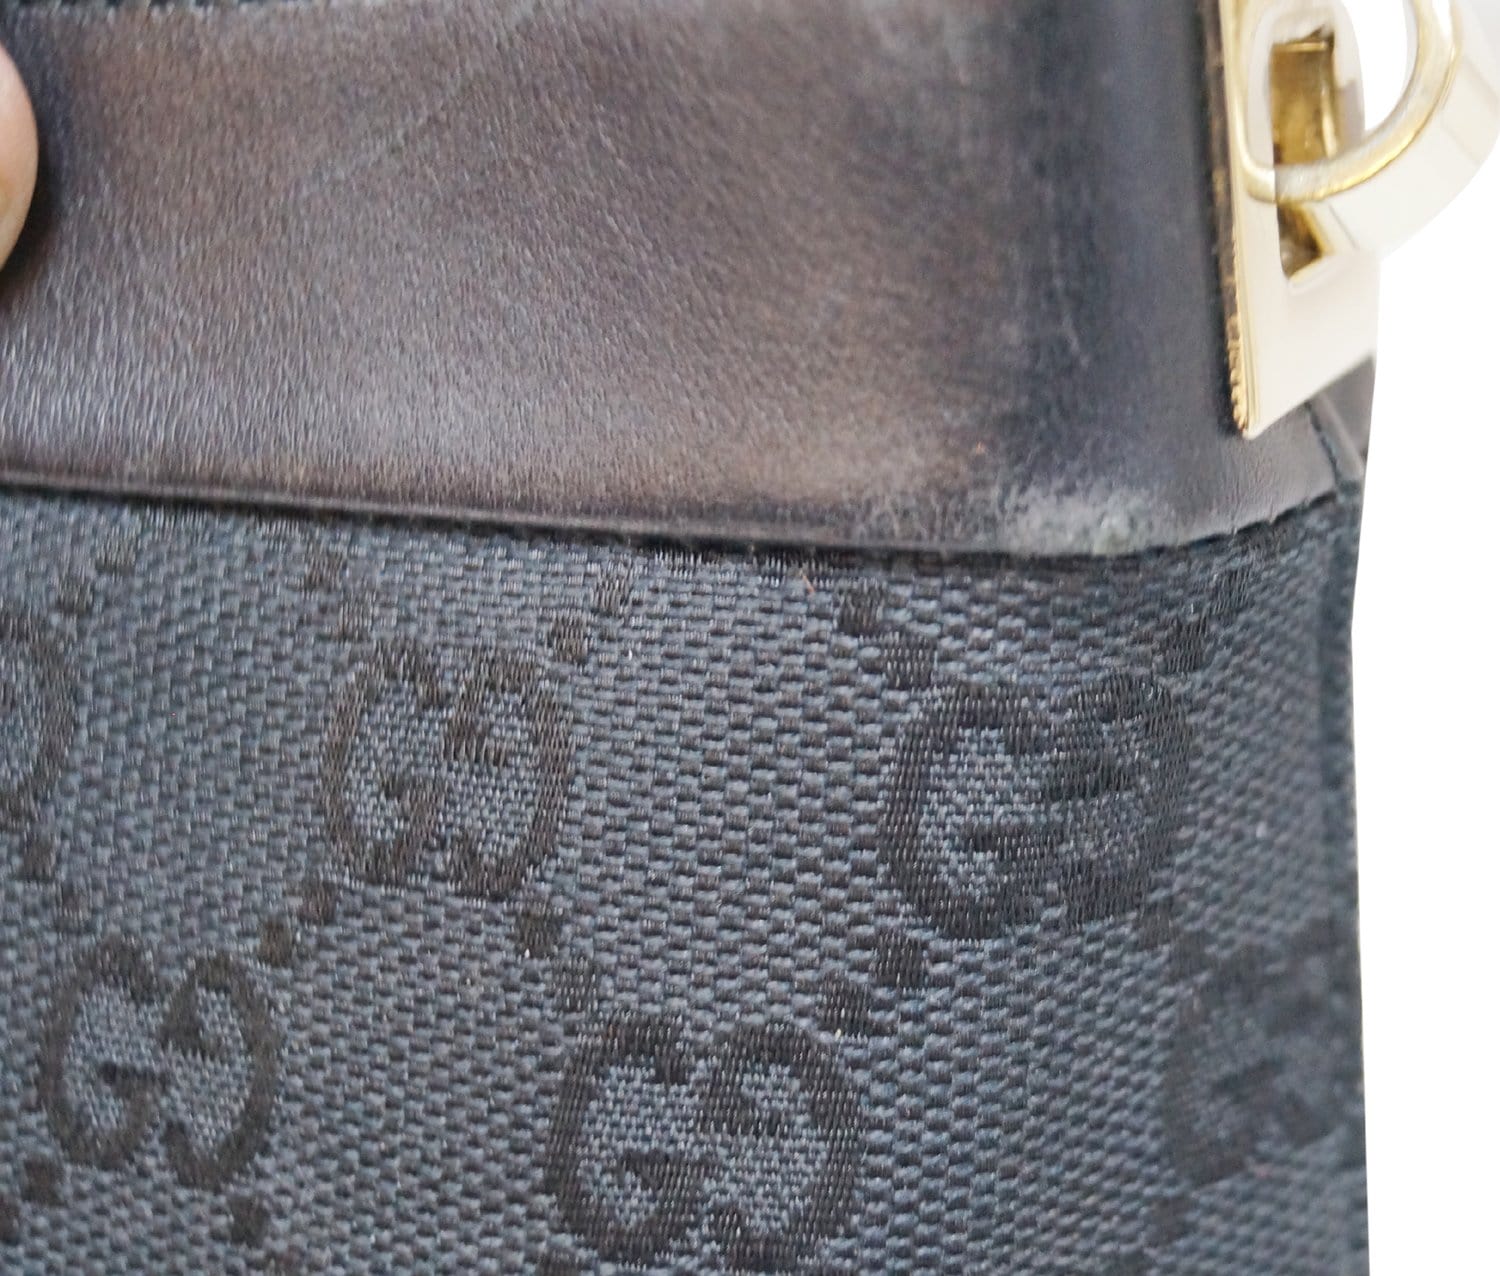 gucci black leather monogram bag